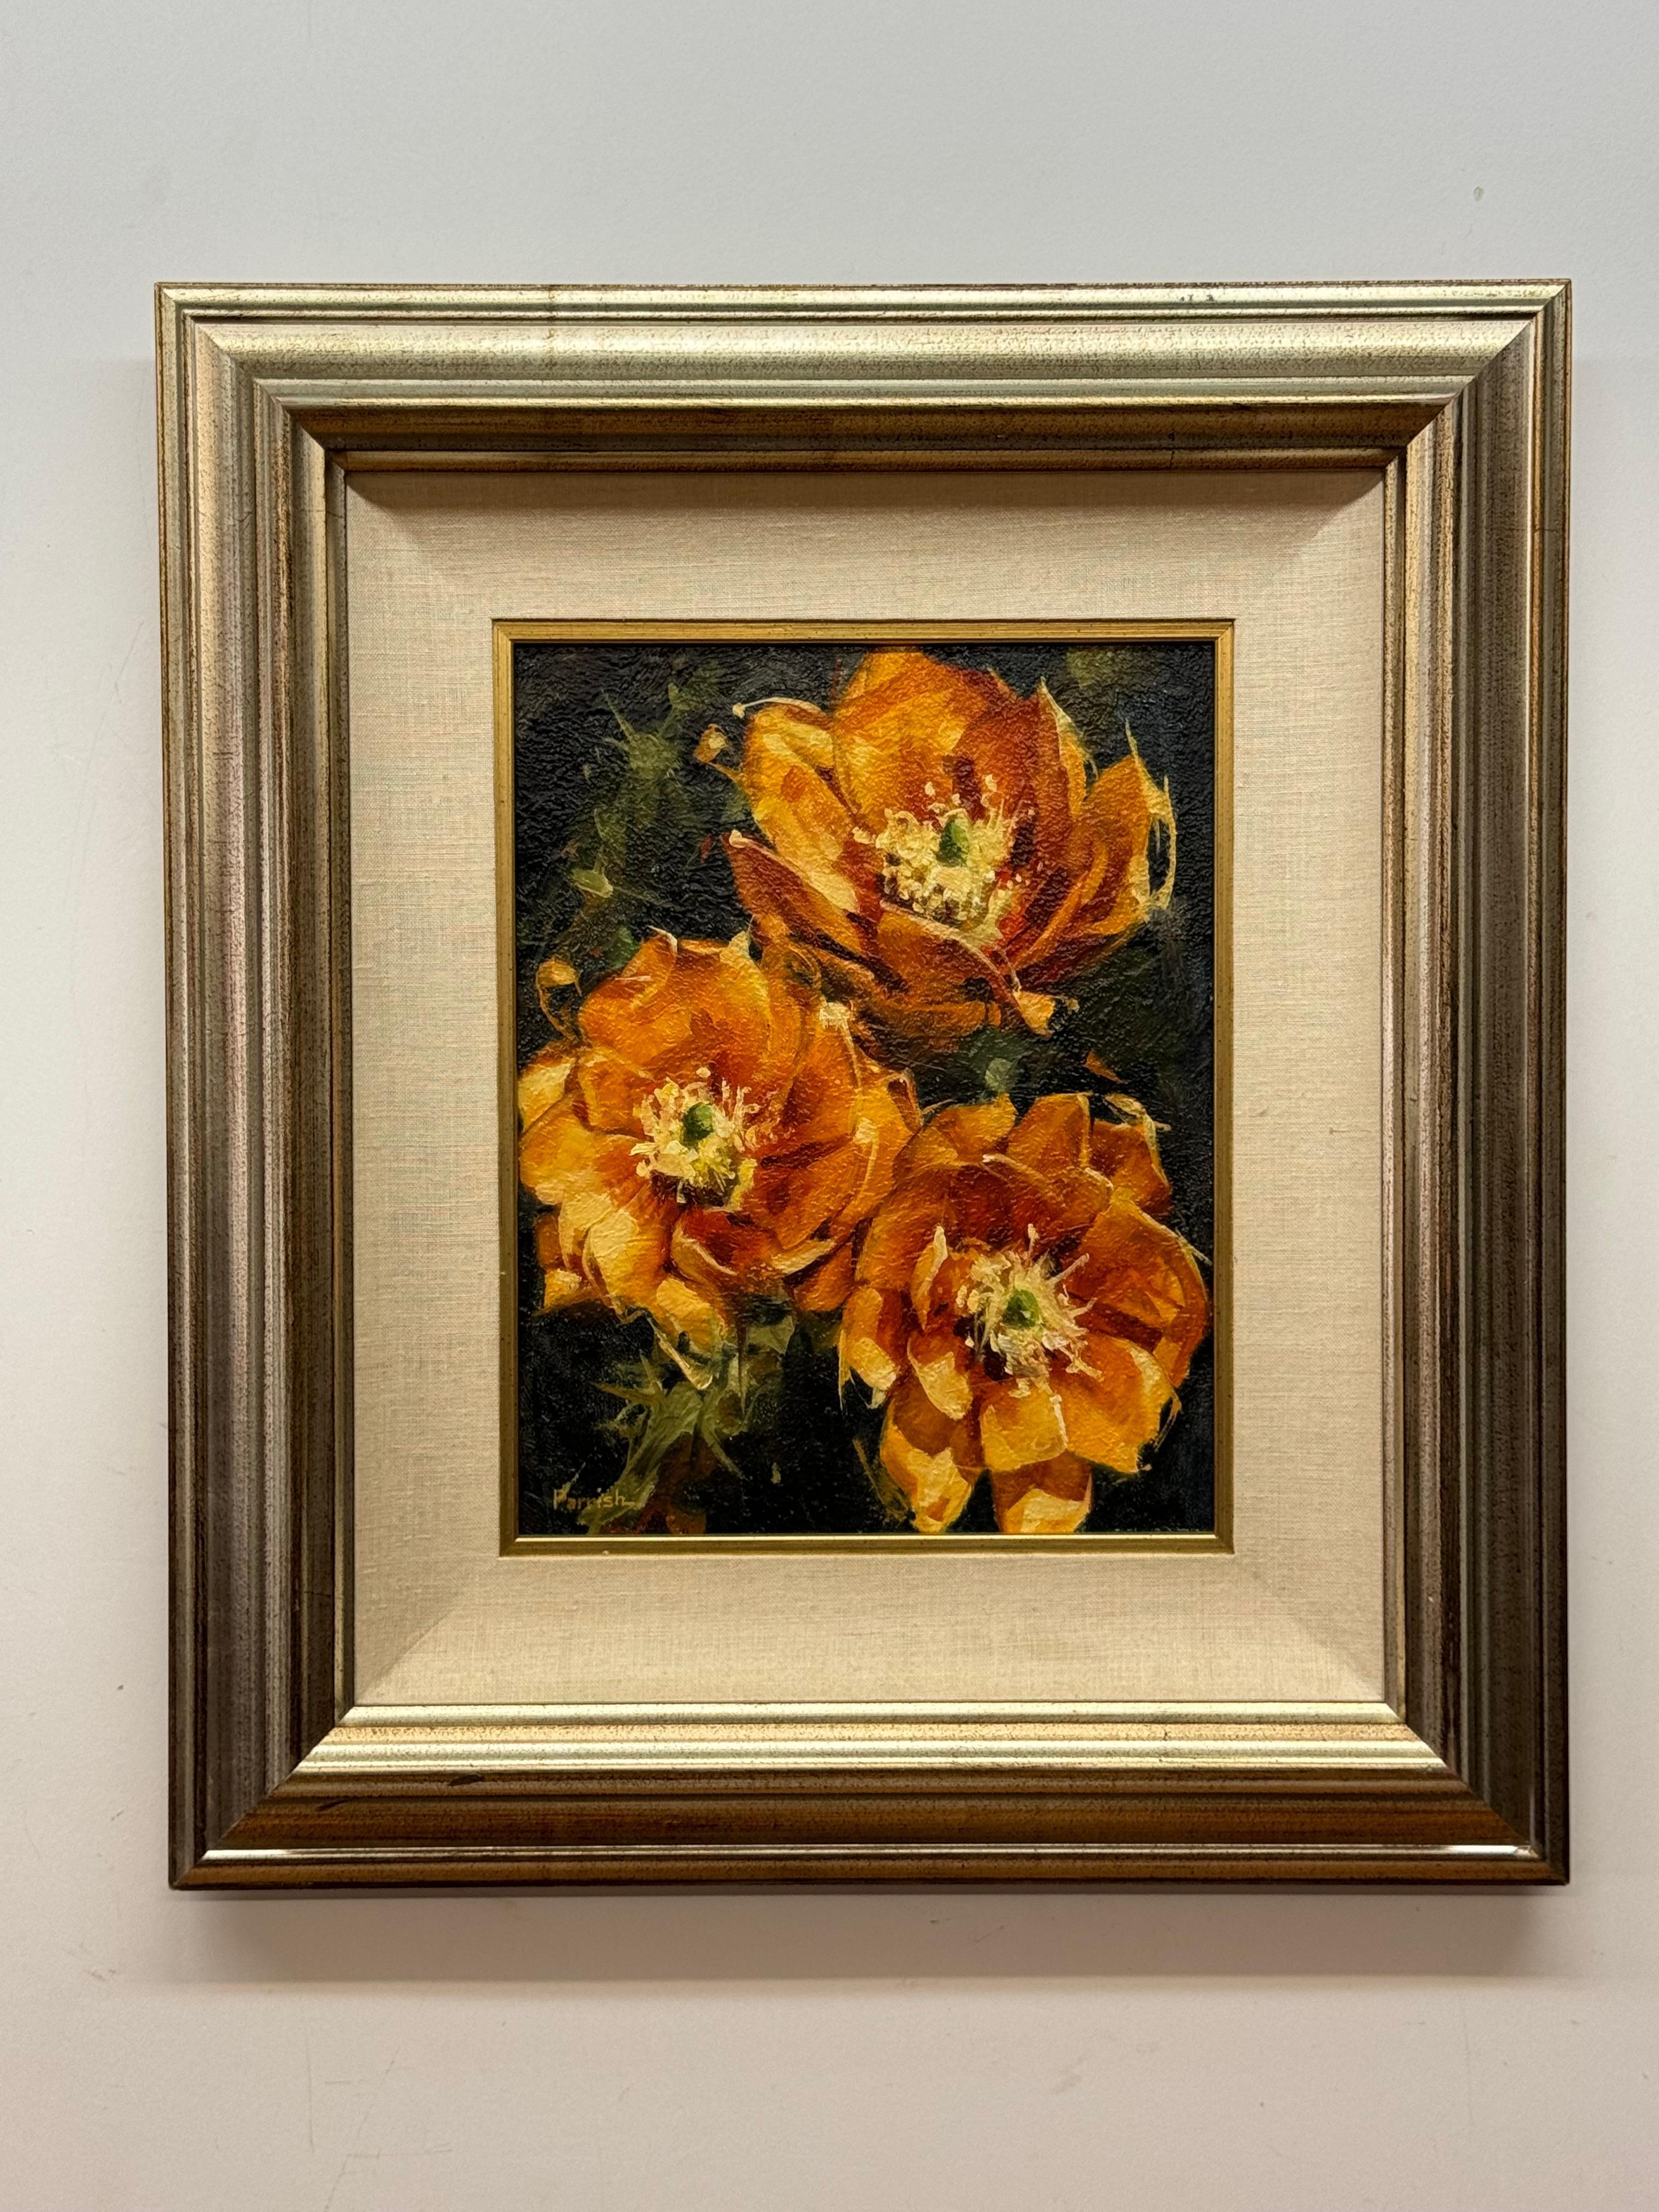 Herbert Parrish "after the rain" floral still life

Marigolds

Oil on masonite

11 x 14 unframed, 21 x 24 framed